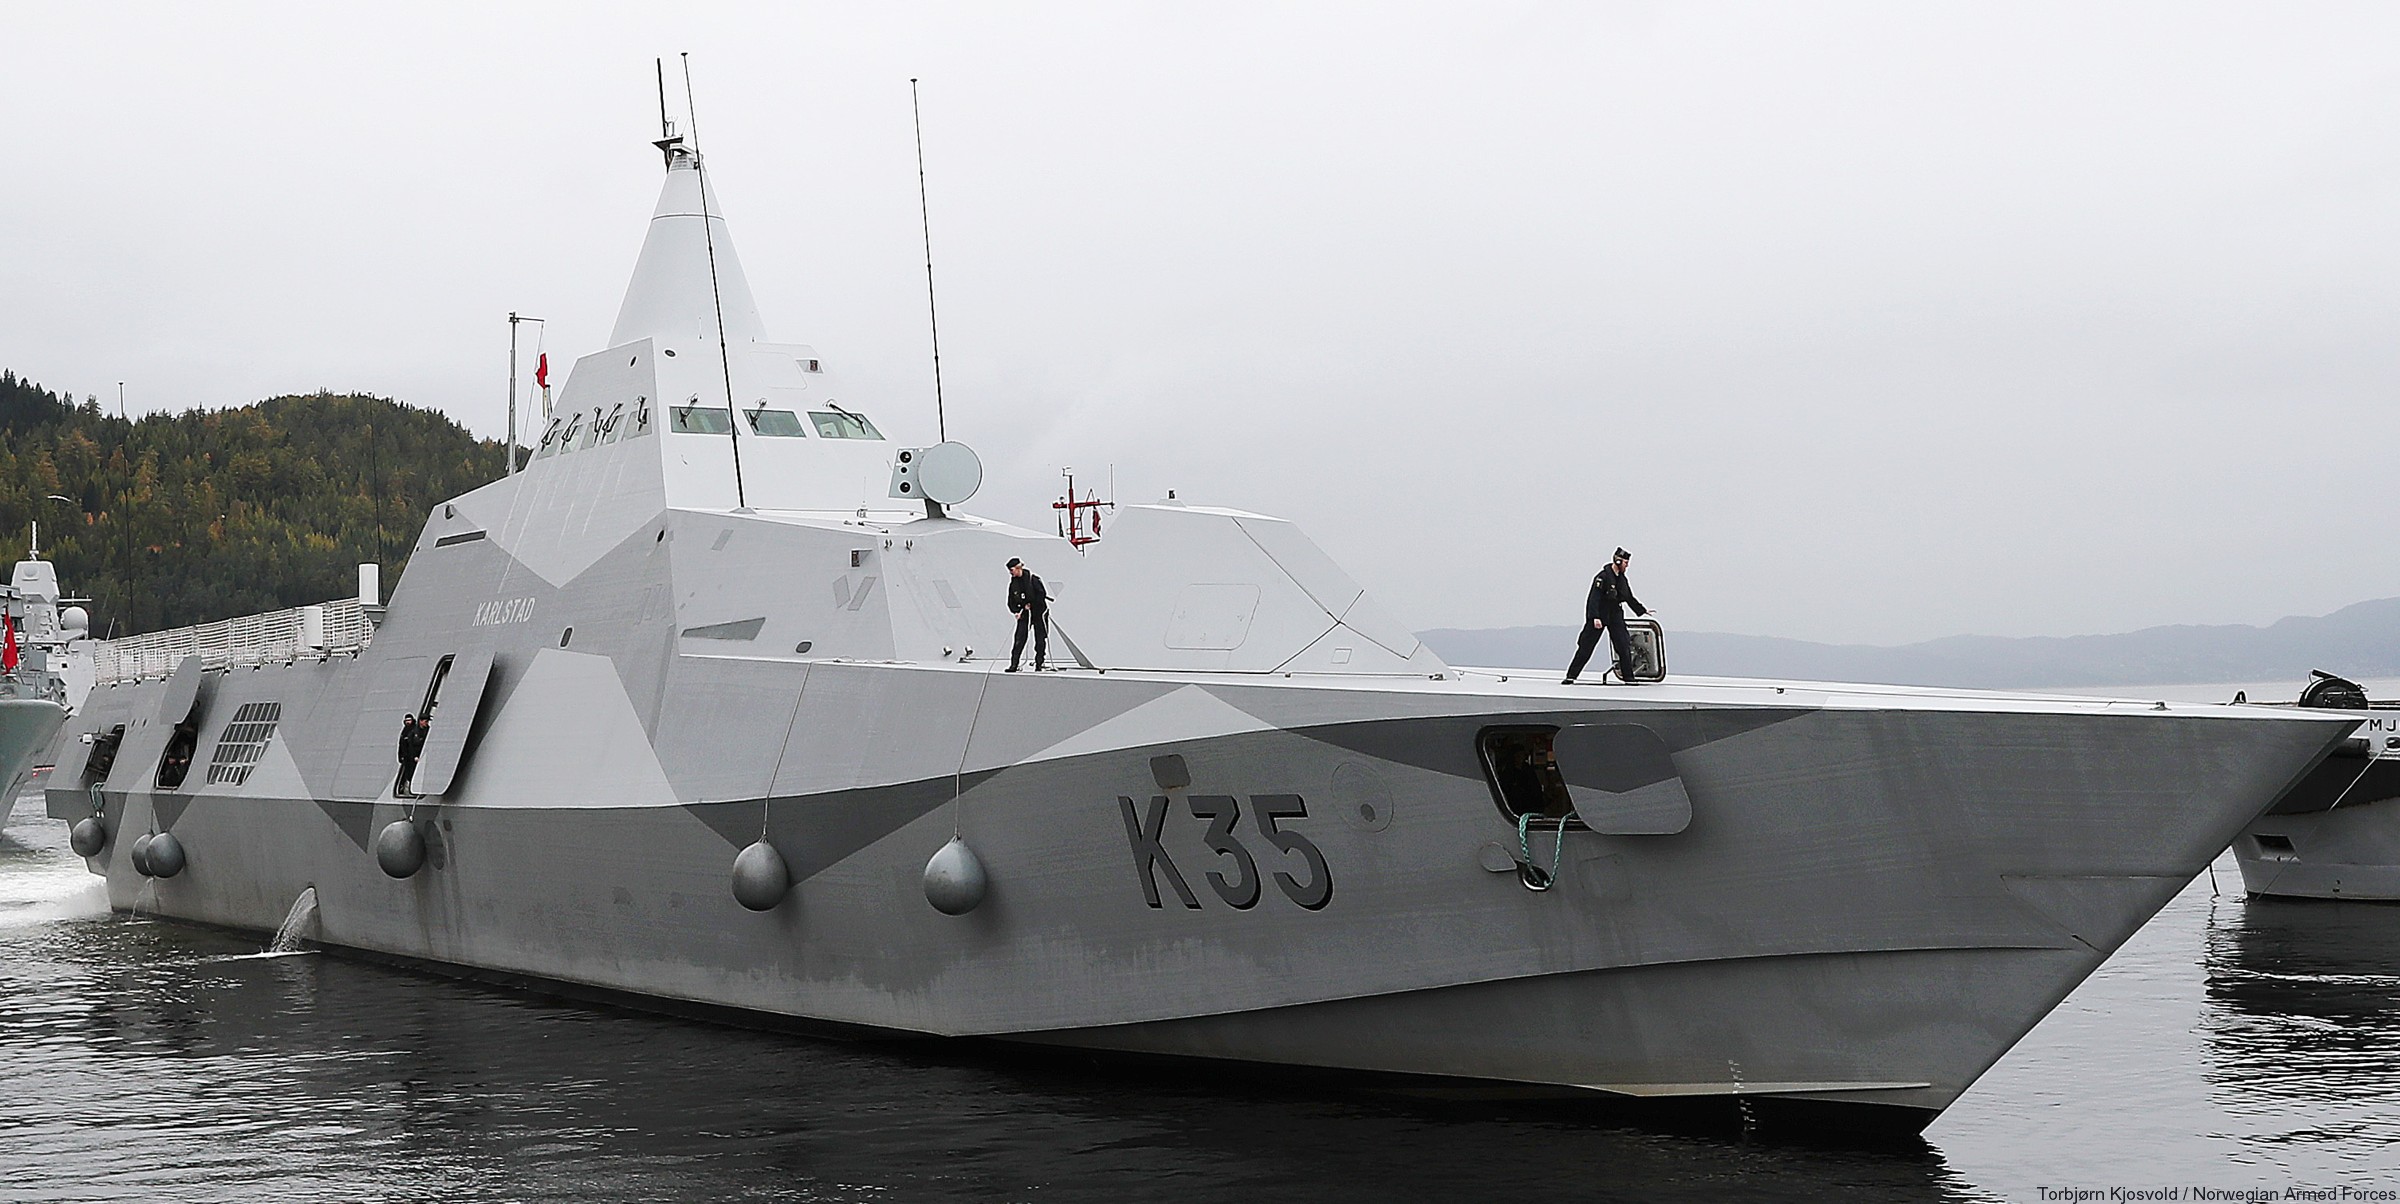 k35 hswms hms karlstad visby class corvette royal swedish navy svenska marinen 03